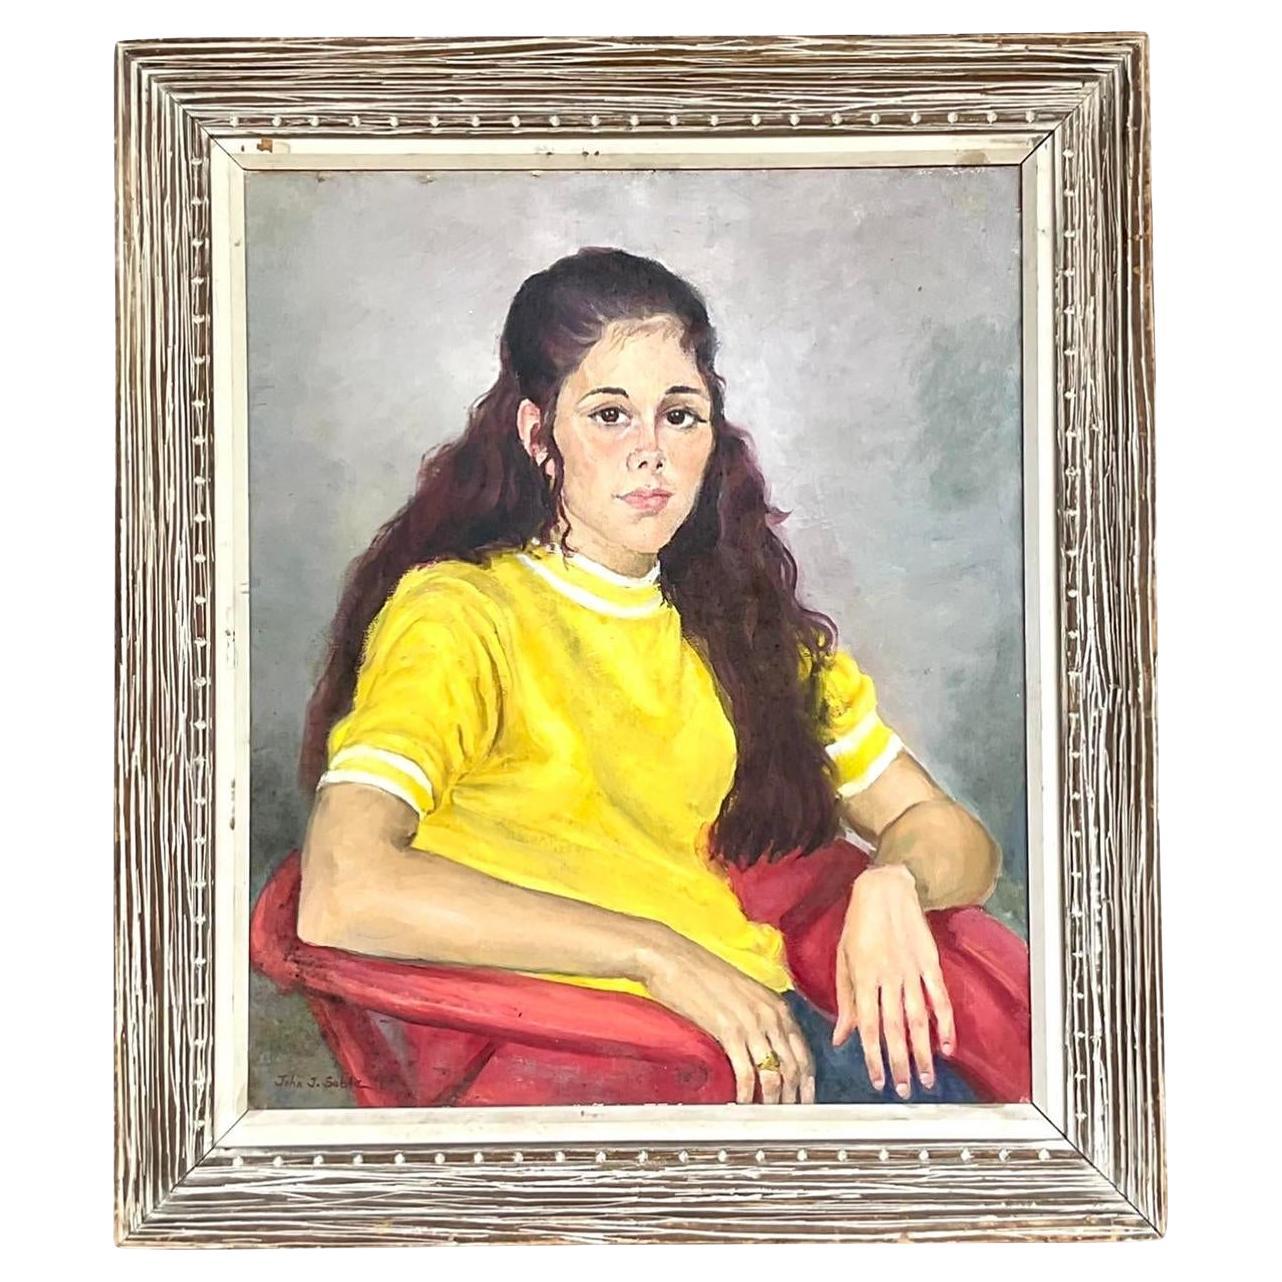 Vintage Boho Signed Original Oil Portrait of Young Woman